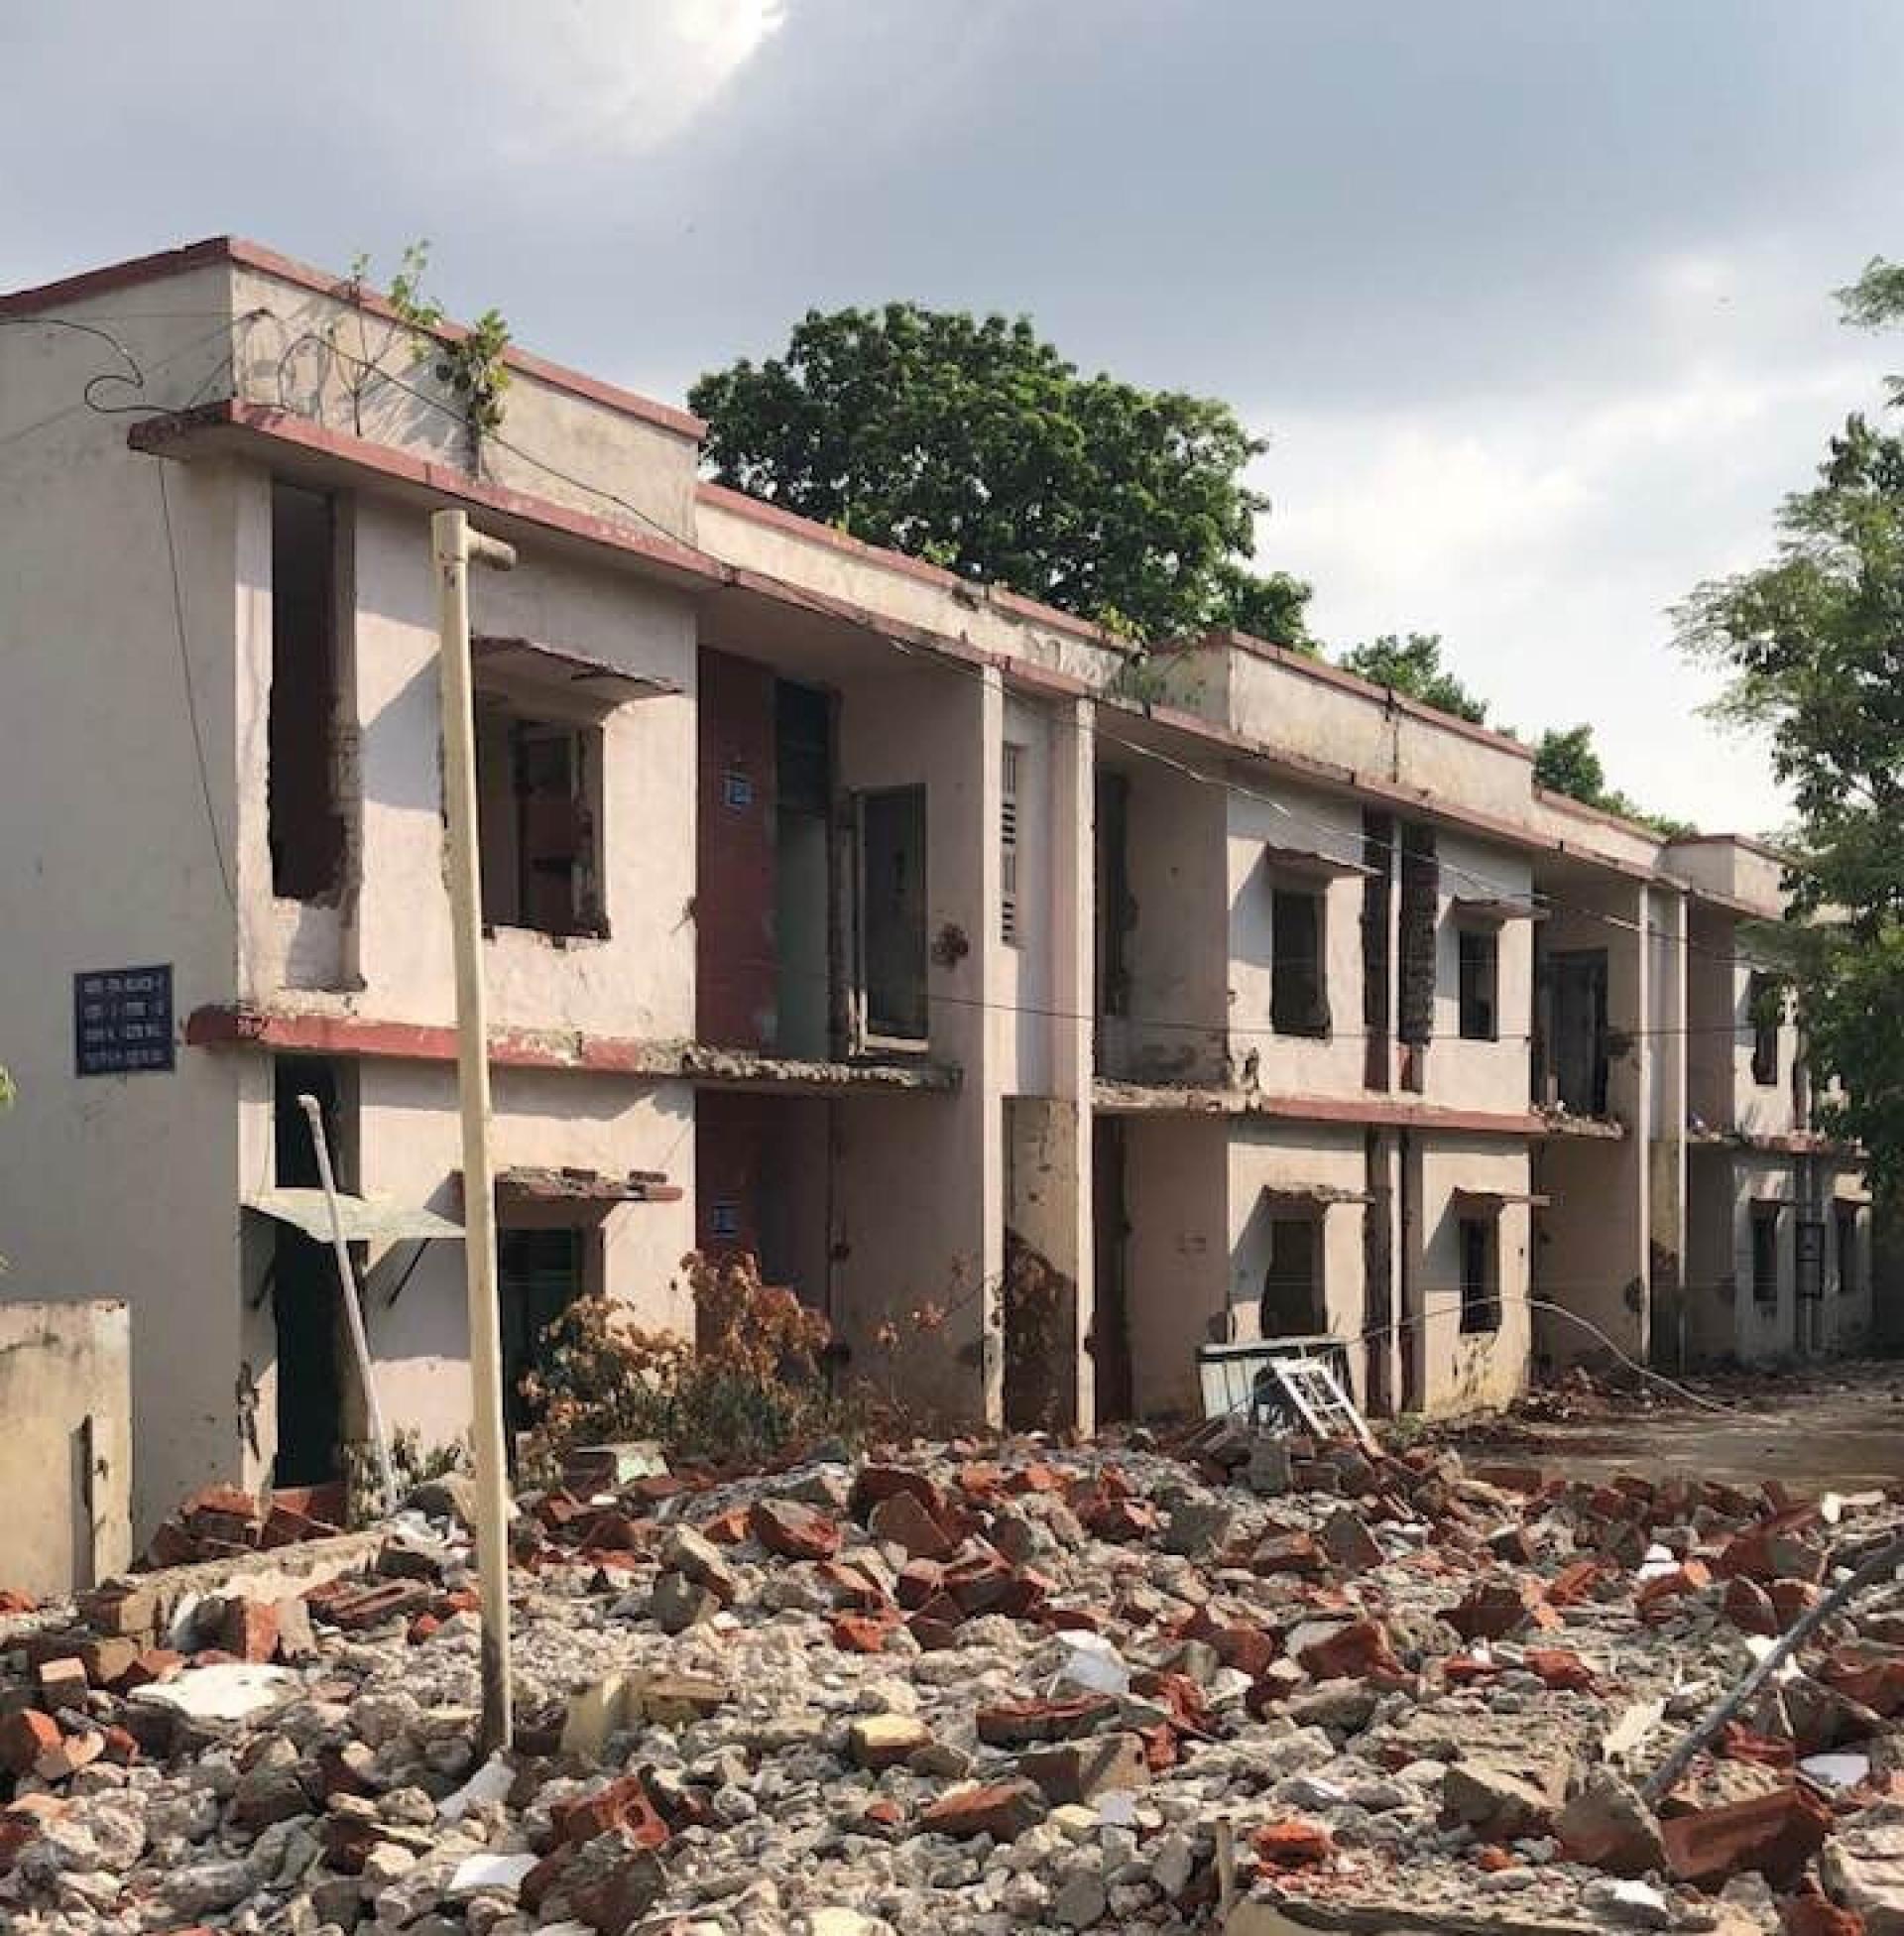 Demolition of “Rahman Type Flats” photographed by Habib Rahman’s son Ram Rahman on 28th June 2018. | Photo via architexturez